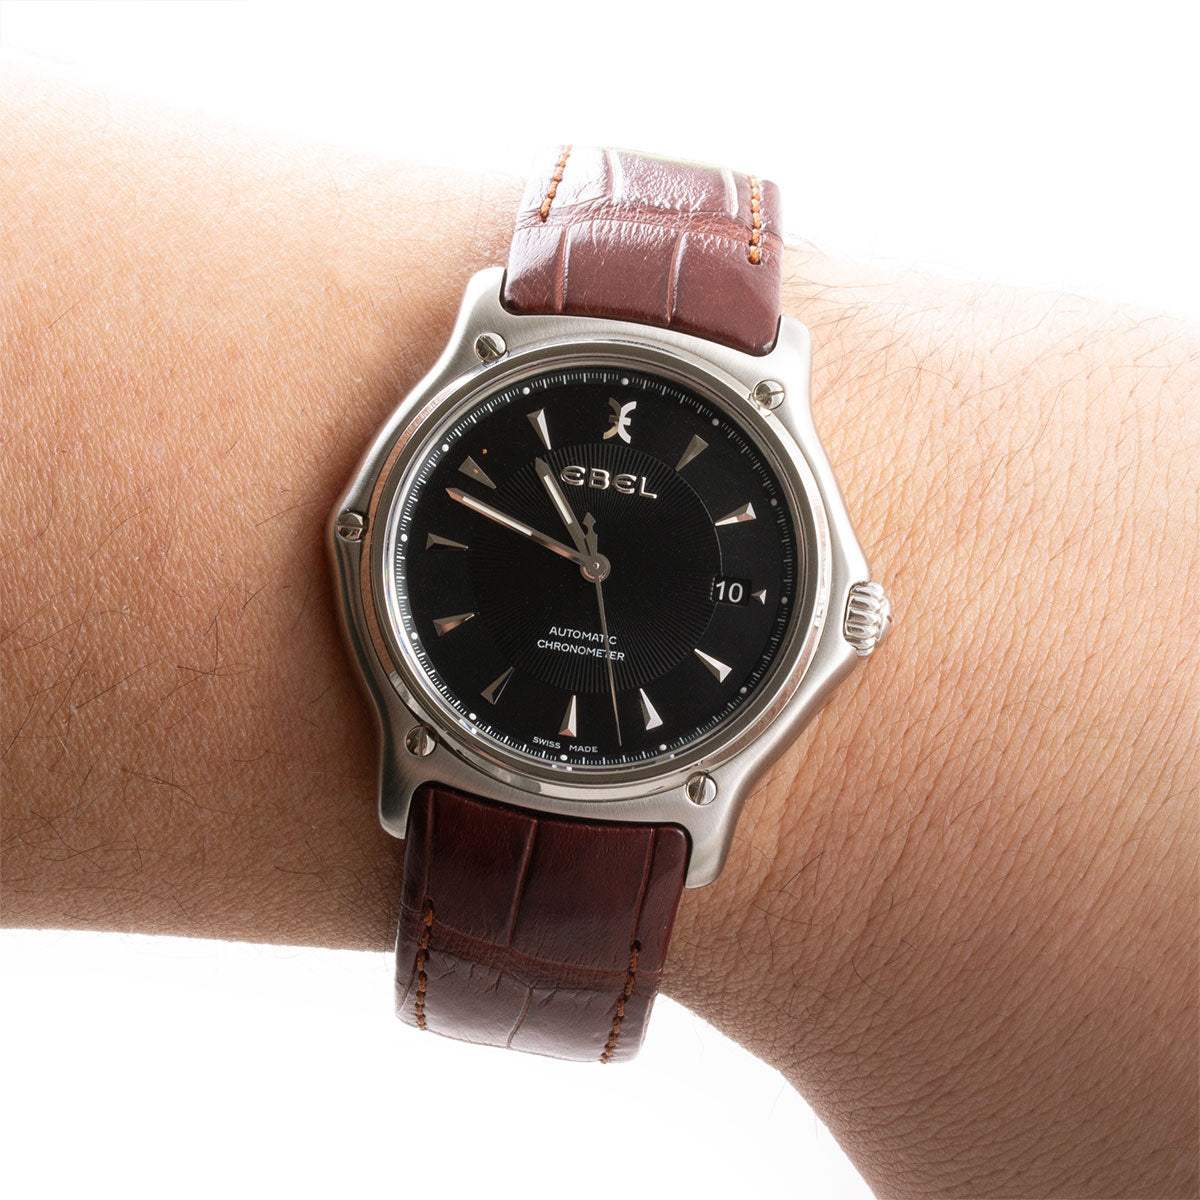 Second-hand watch - Ebel - 1800€